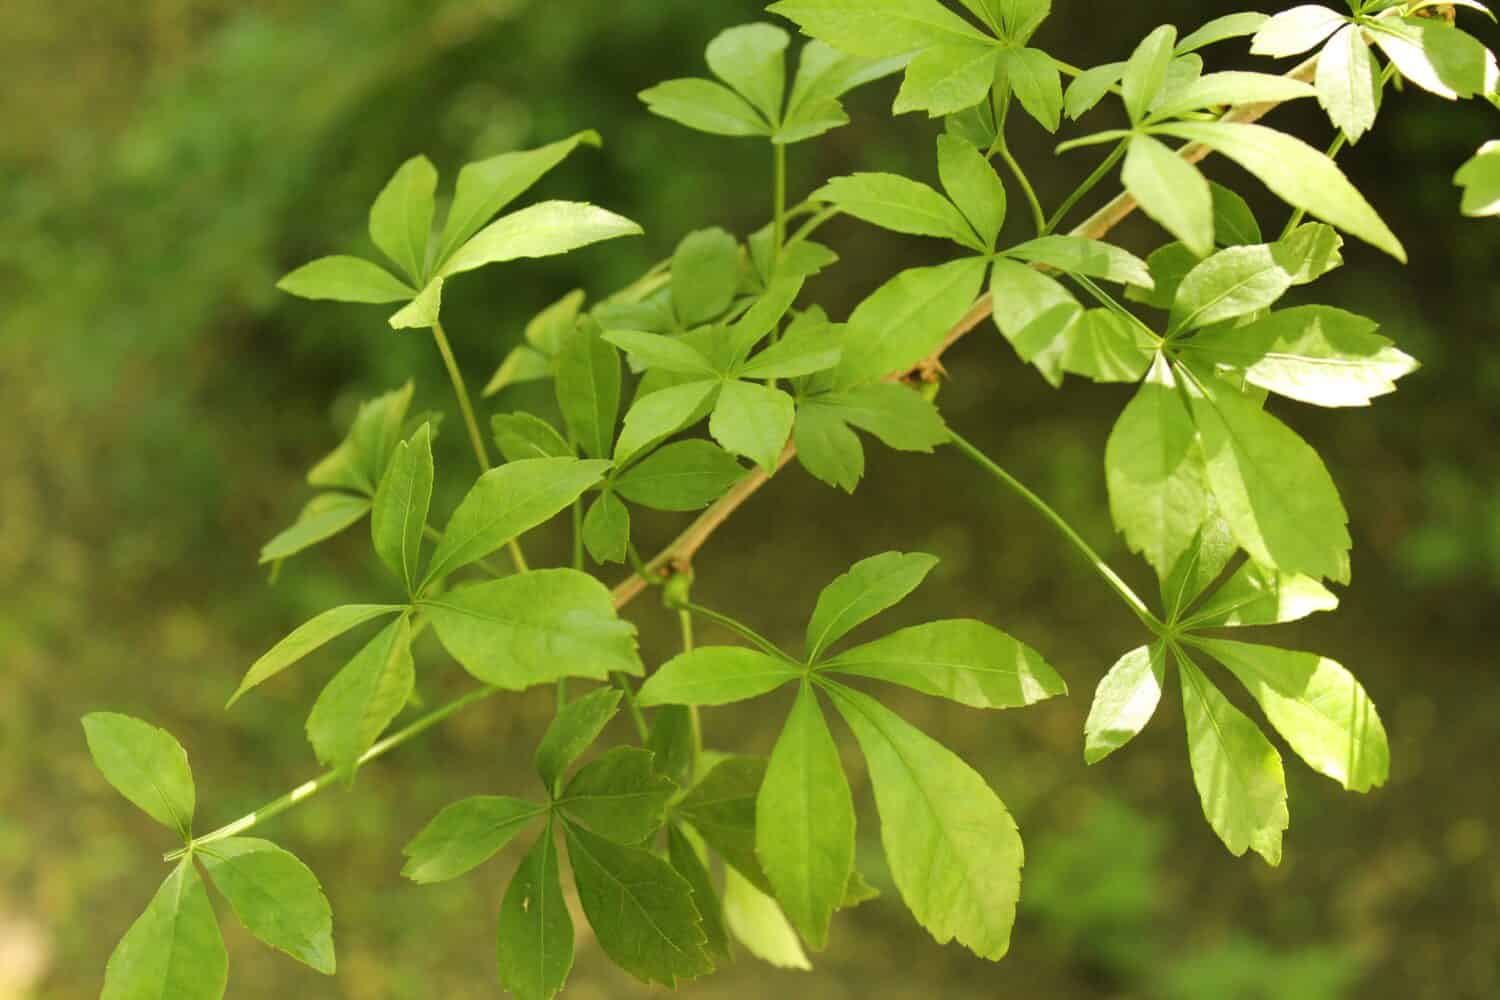 Eleutherococcus sieboldianus, bush with green leaves